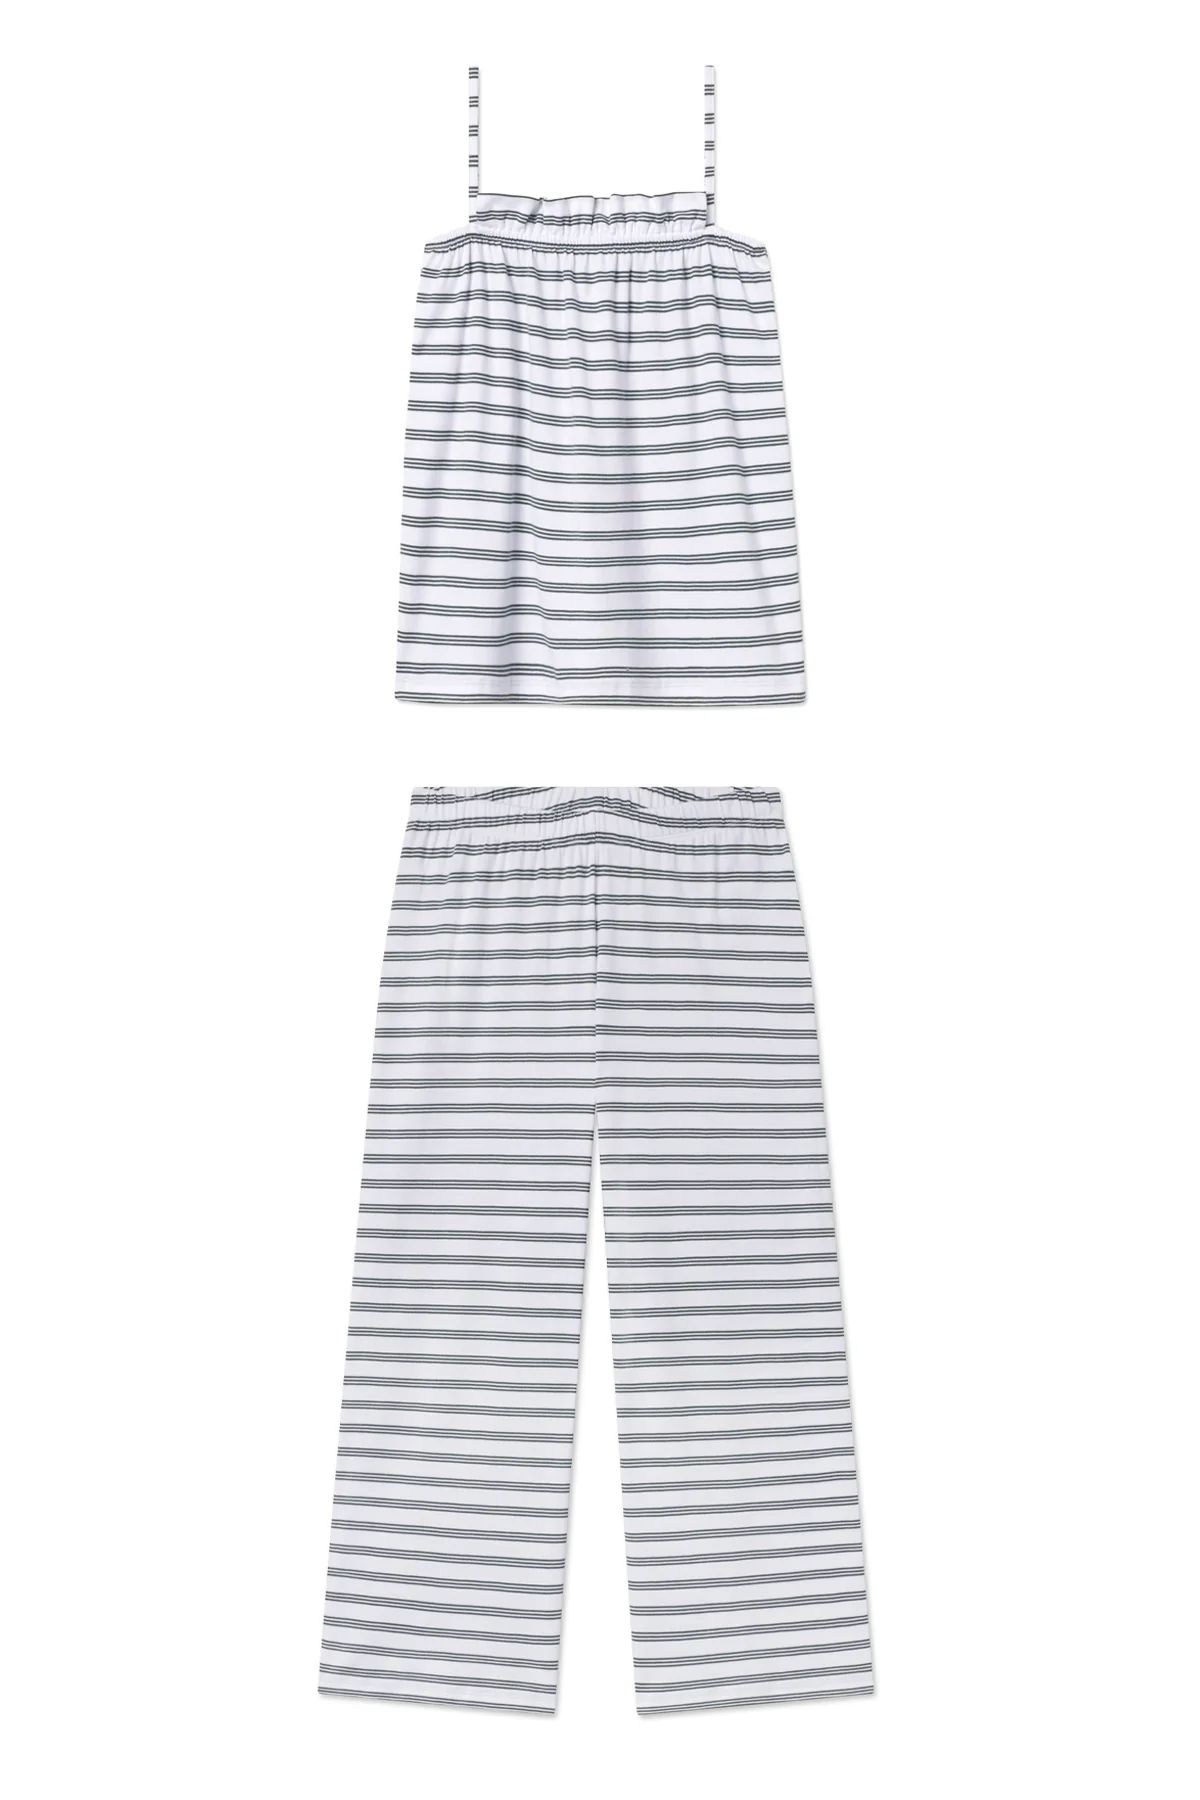 Pima Ruffle Pants Set in Conifer Stripe | Lake Pajamas